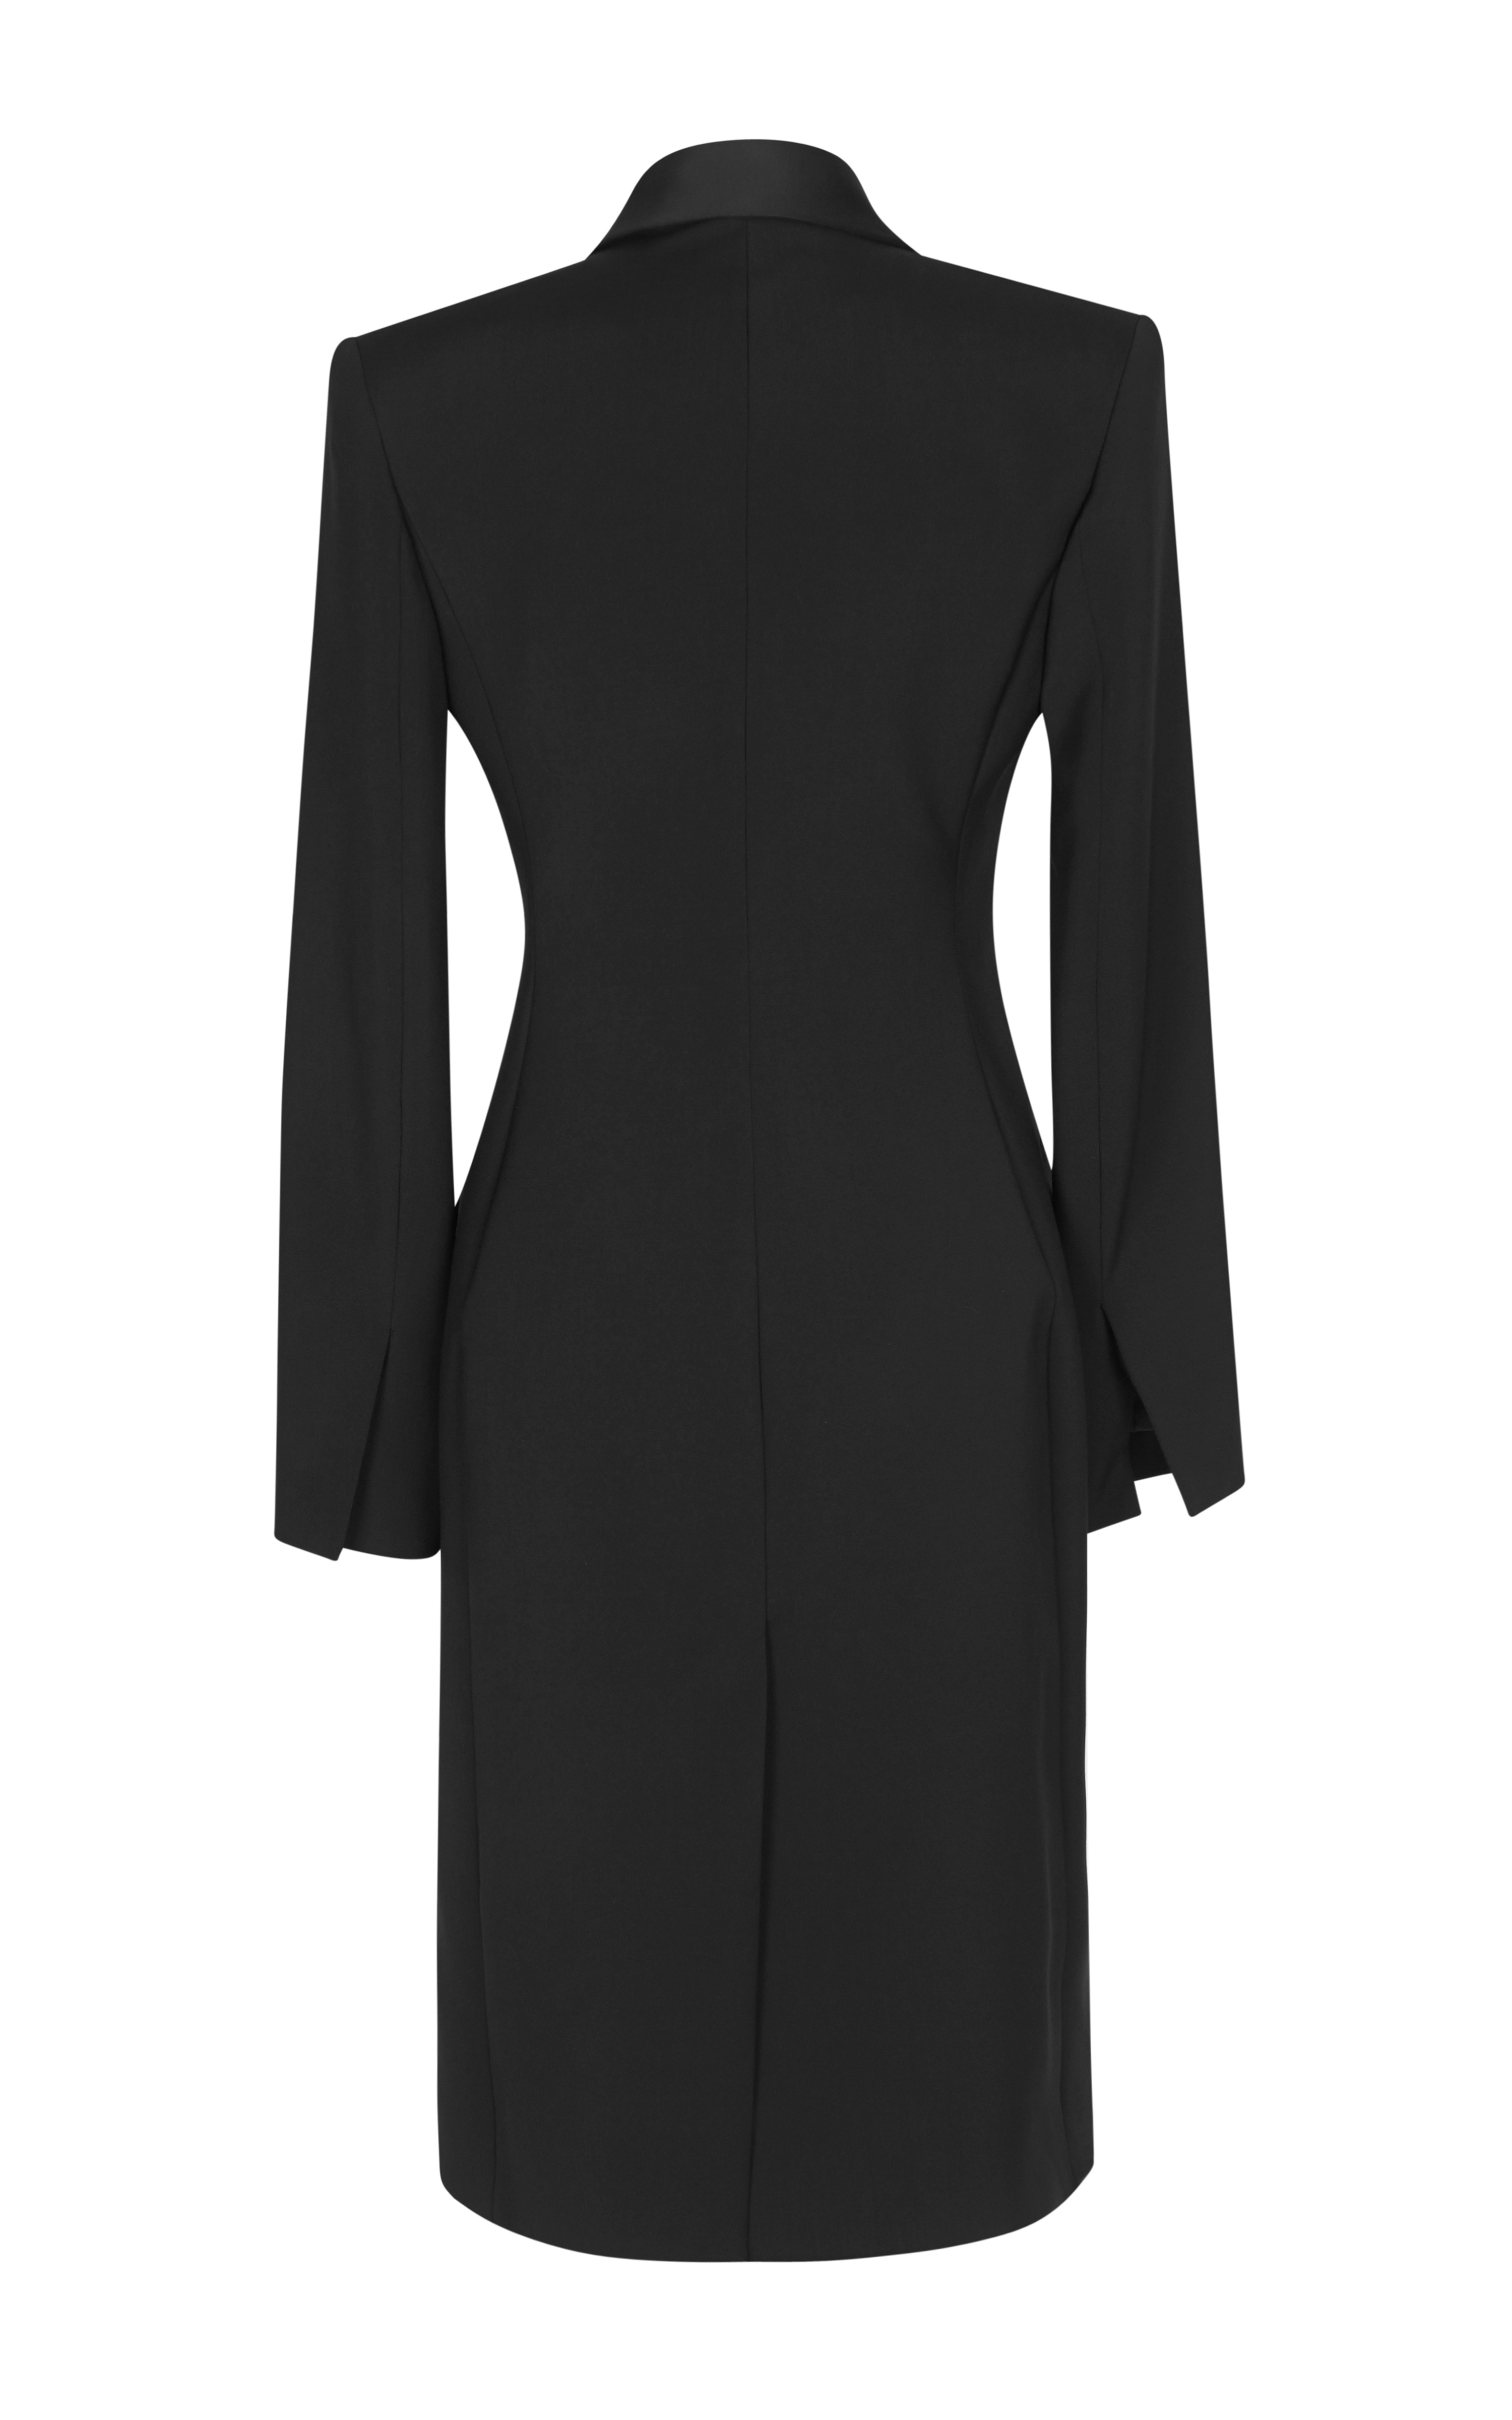 Lyst - Josh Goot Tuxedo Tailoring Double Breasted Coat Dress in Black